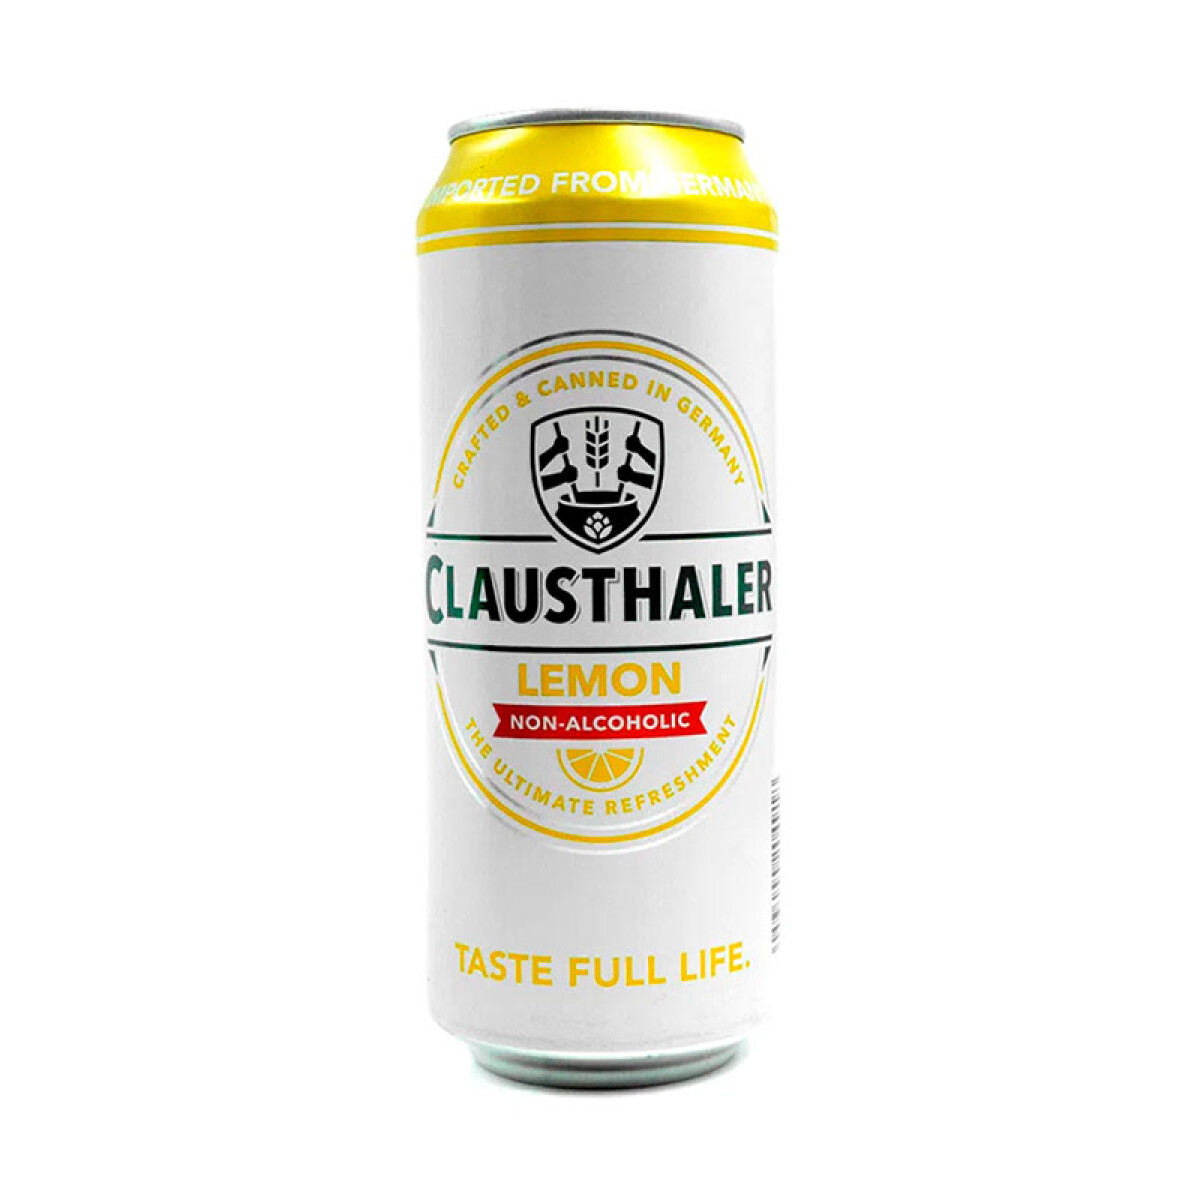 Cerveza CLAUSTHALER Lemon Lata 500ml - Funda x6 